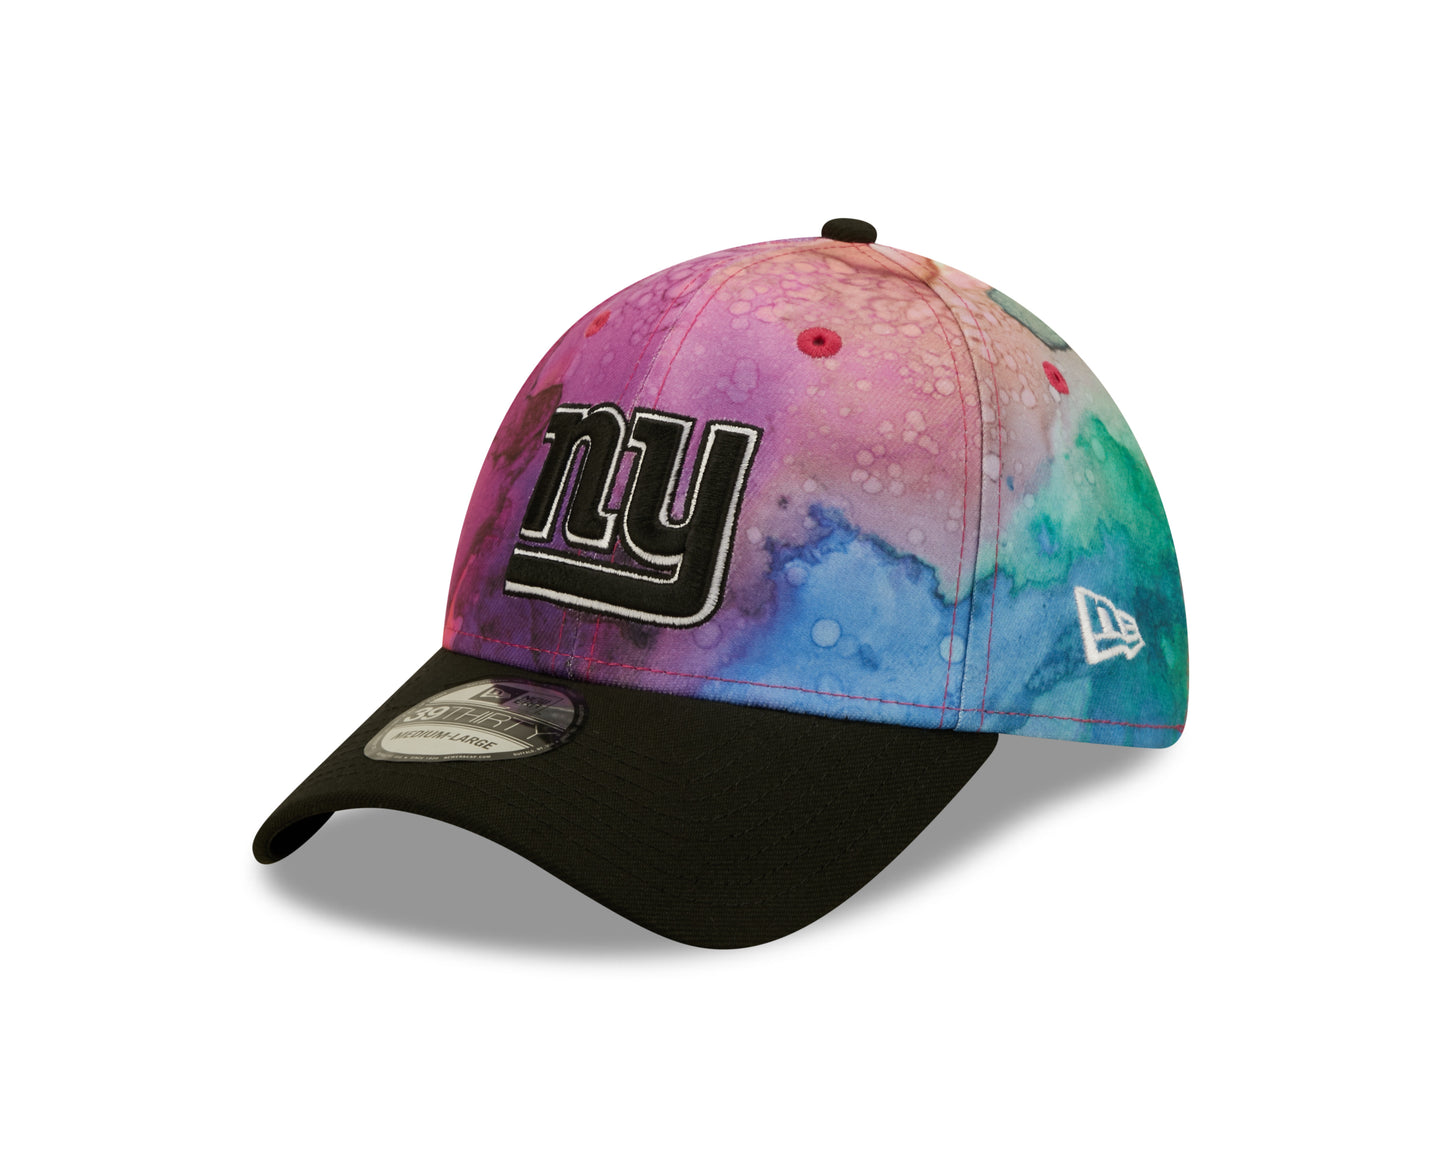 New York Giants Era  New Era Sideline Crucial Catch 39Thirty Hat-Pink